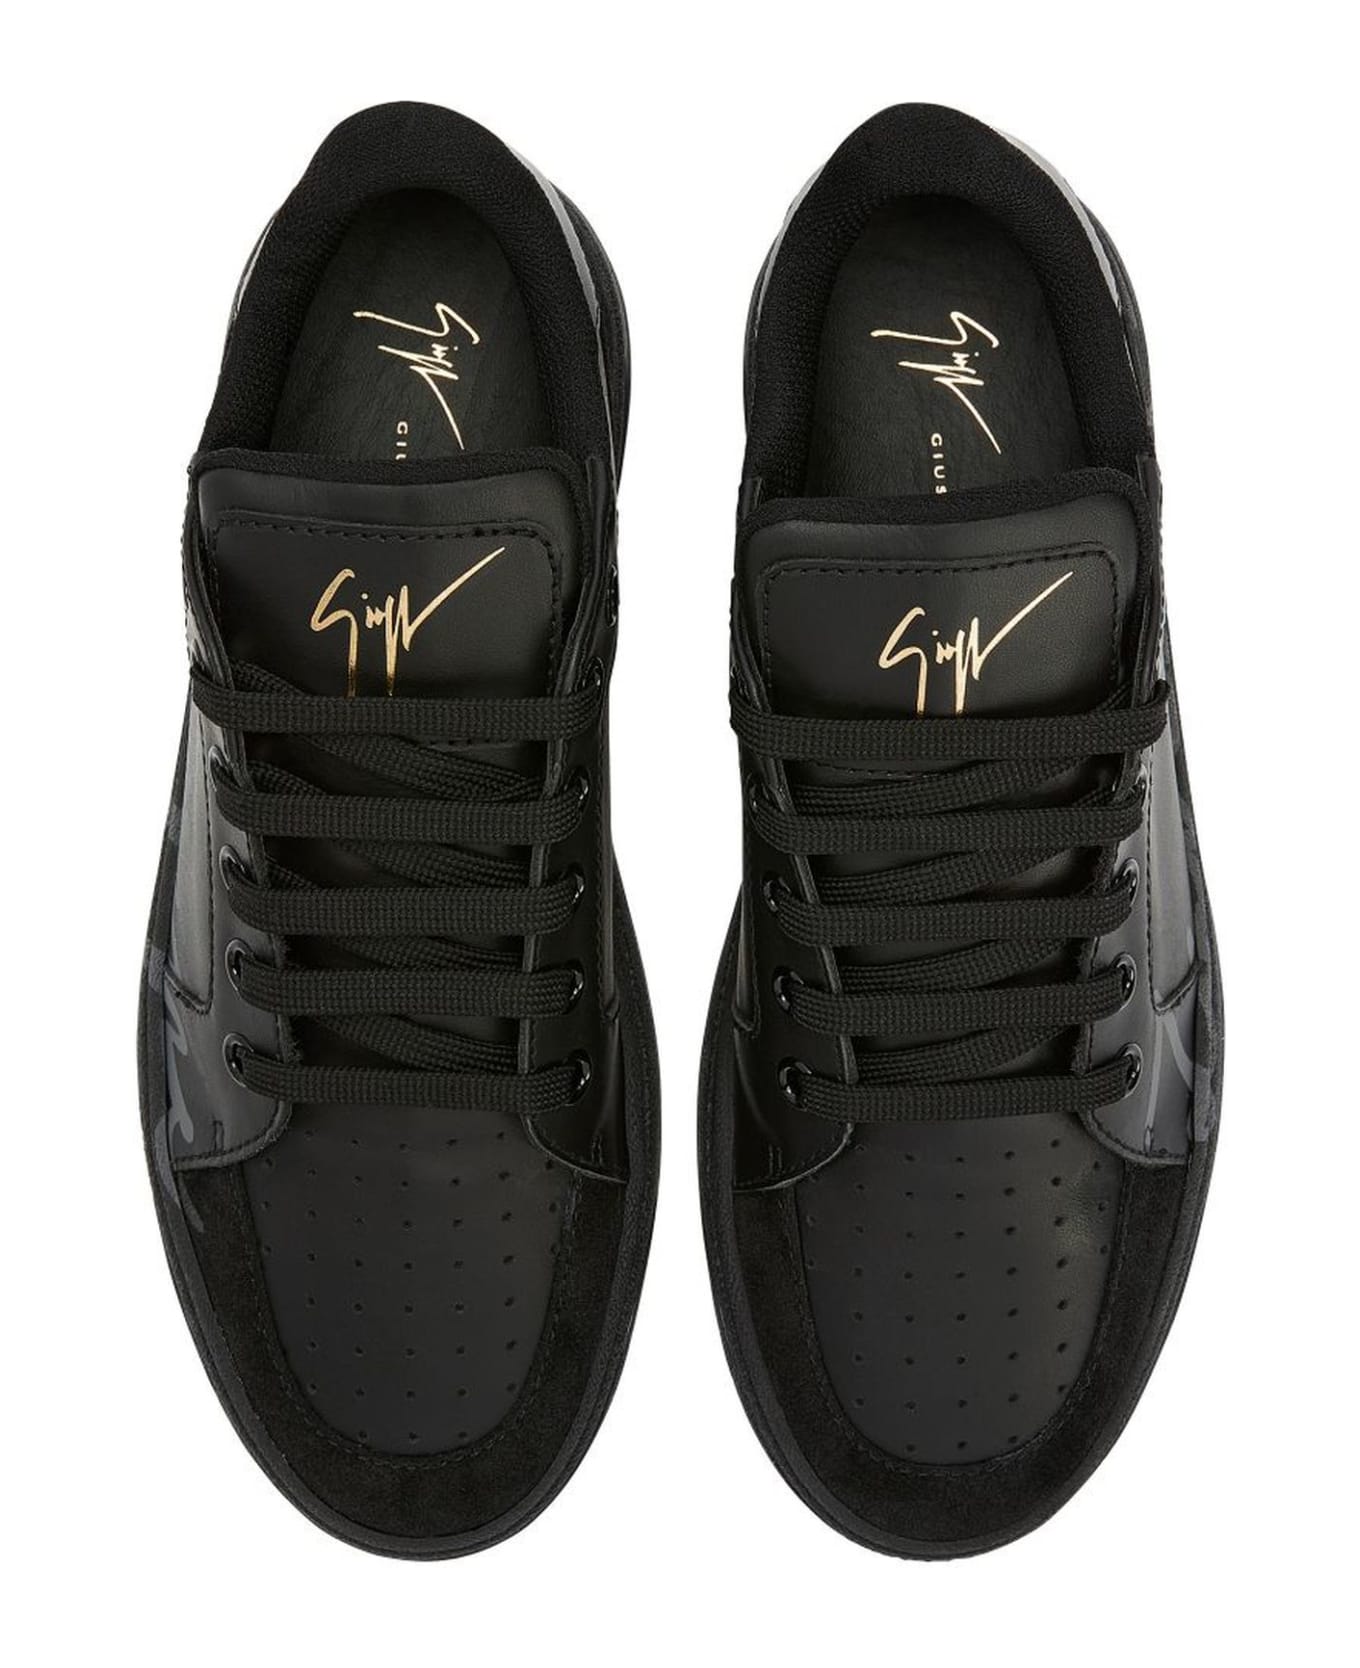 Giuseppe Zanotti Black Leather Low-top Gz94 Sneakers - Black